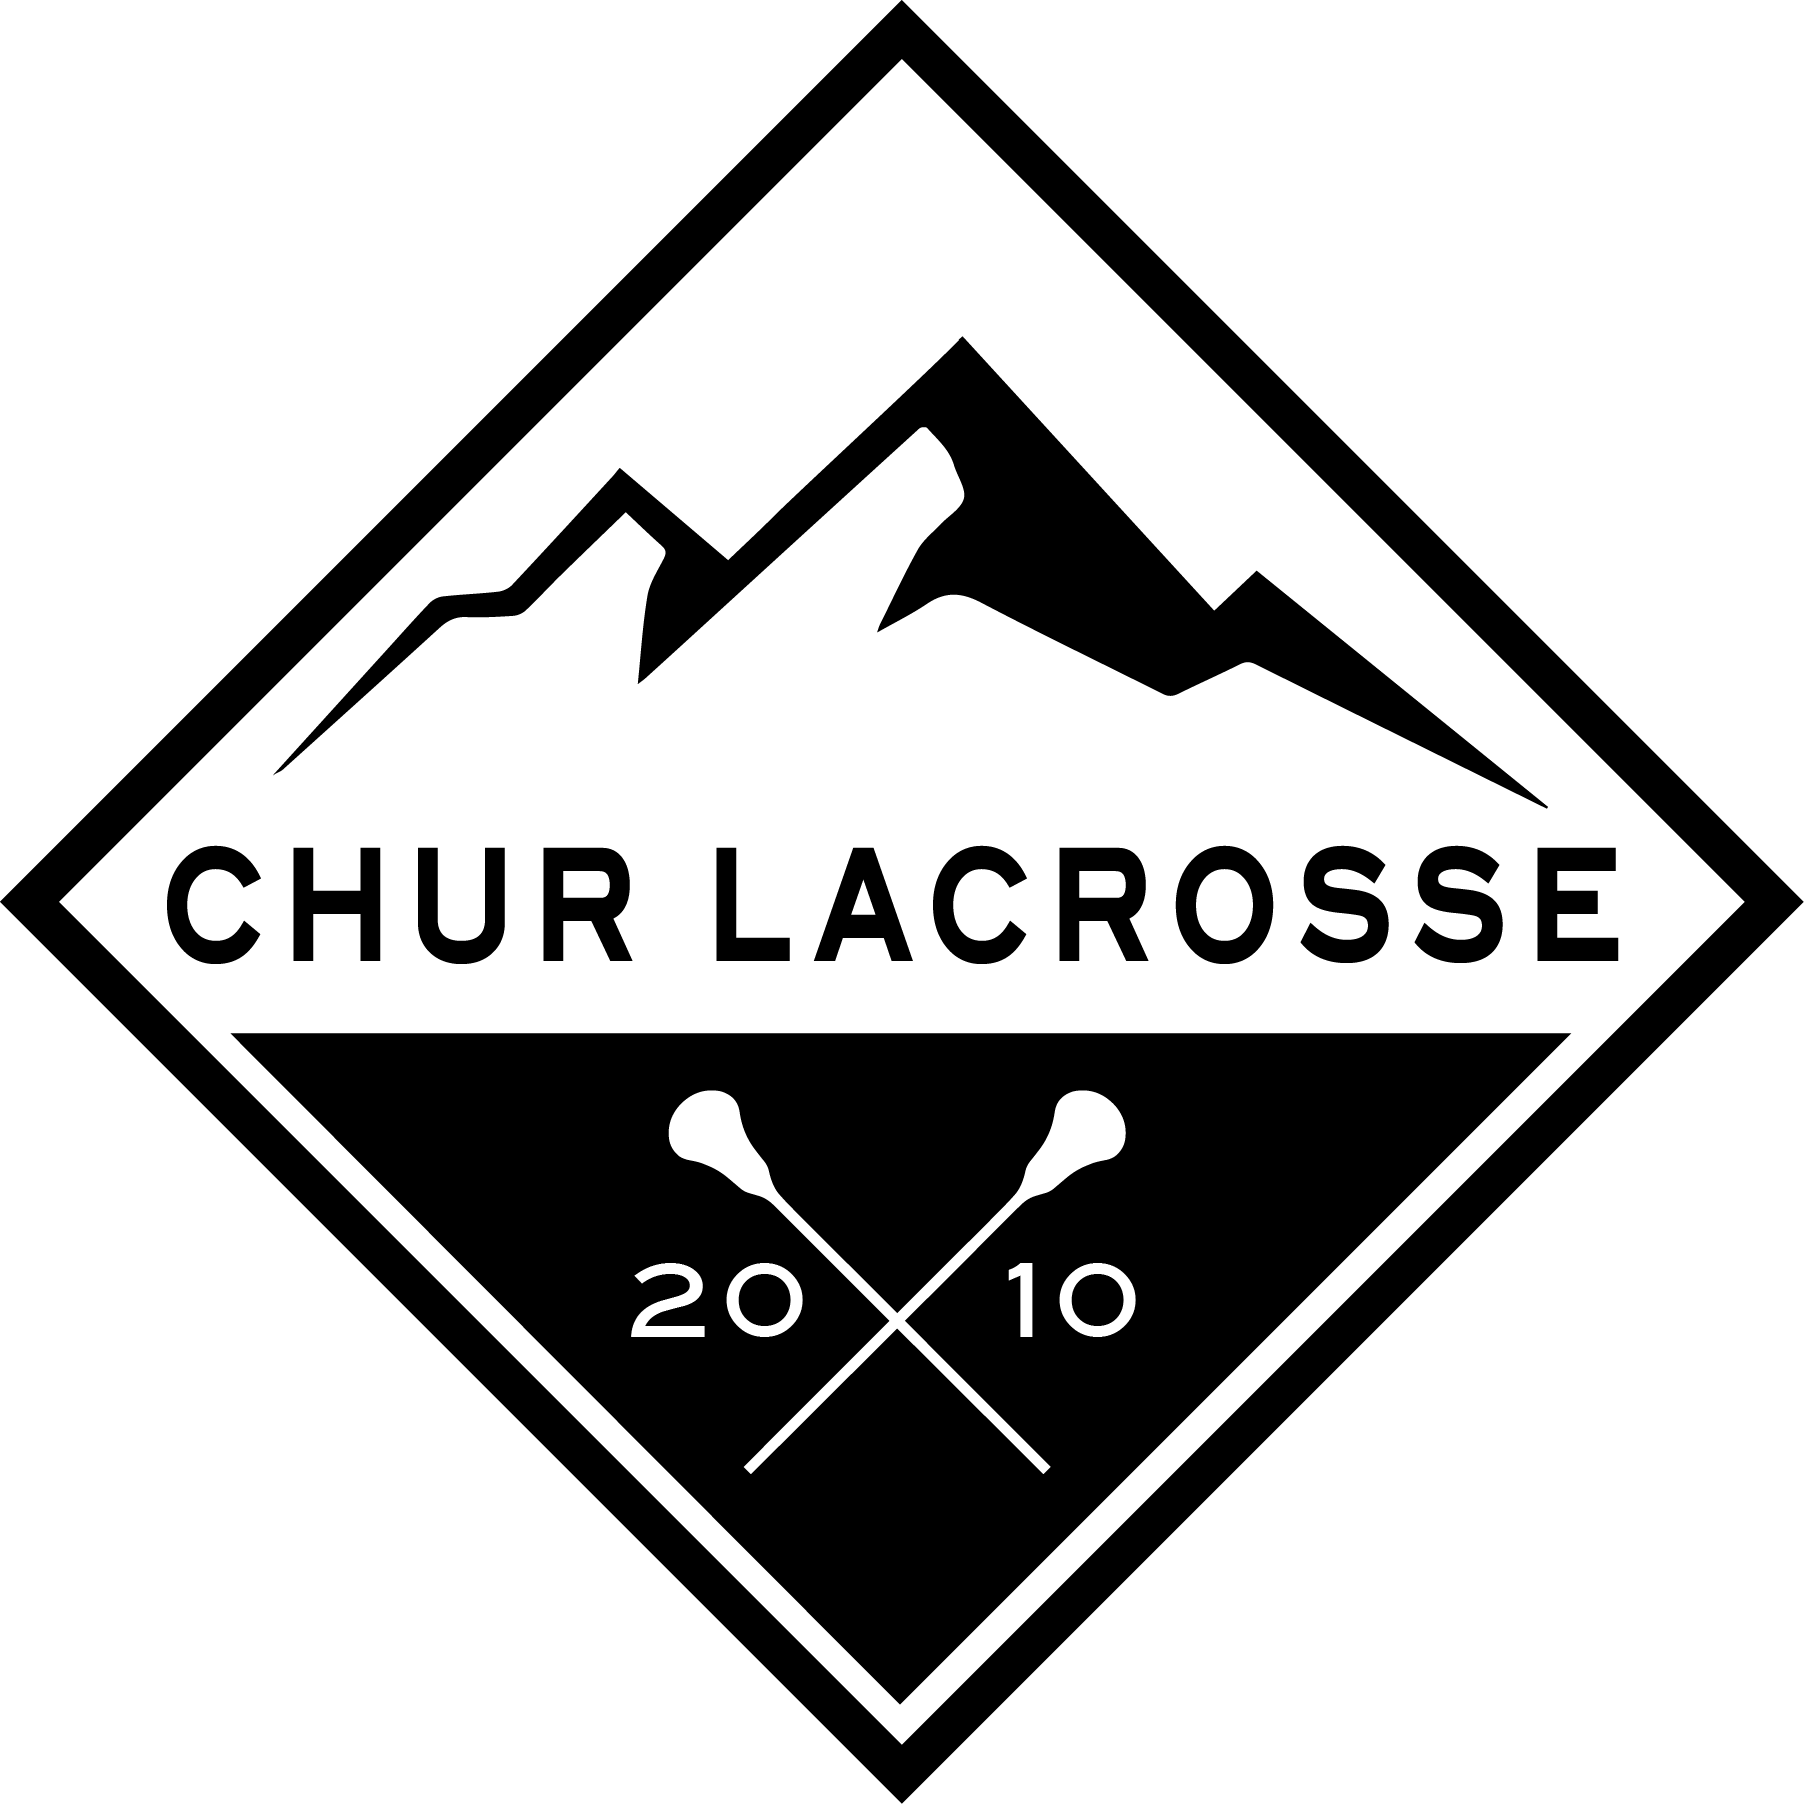 Chur Lacrosse